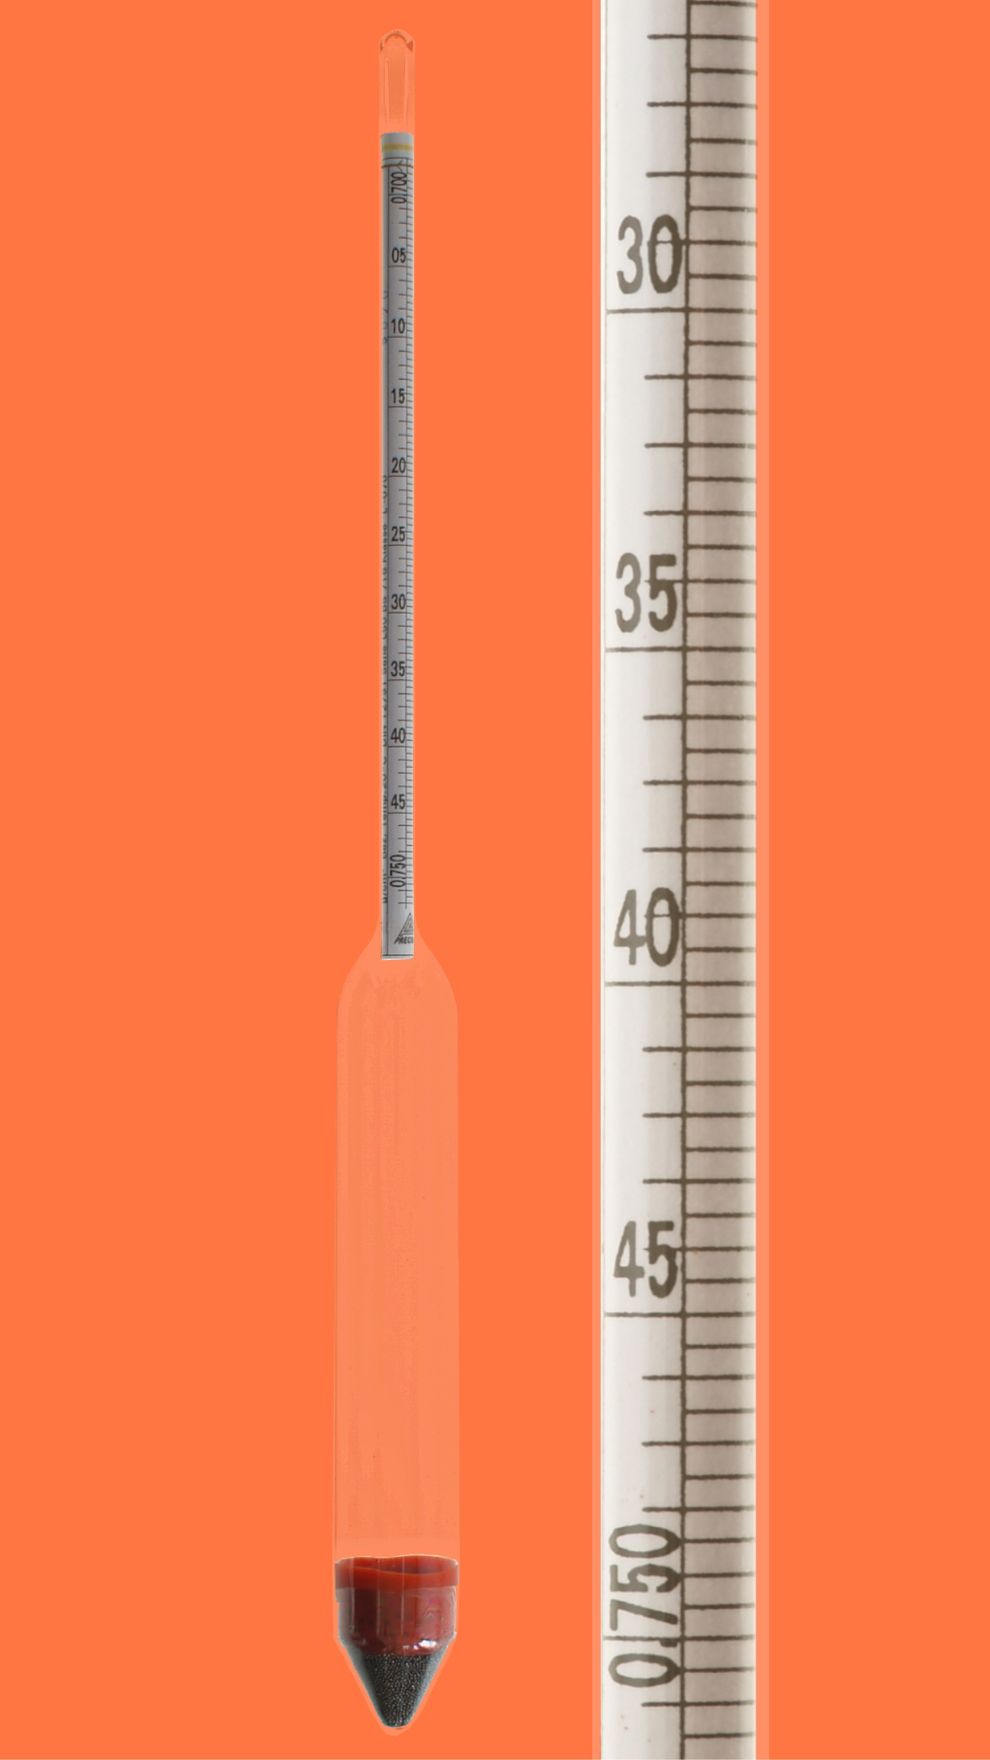 Aräometer, DIN 12791, L50, 1,60-1,65:0,0005g/cm³, Bezugstemp. 20°C, ohne Thermometer